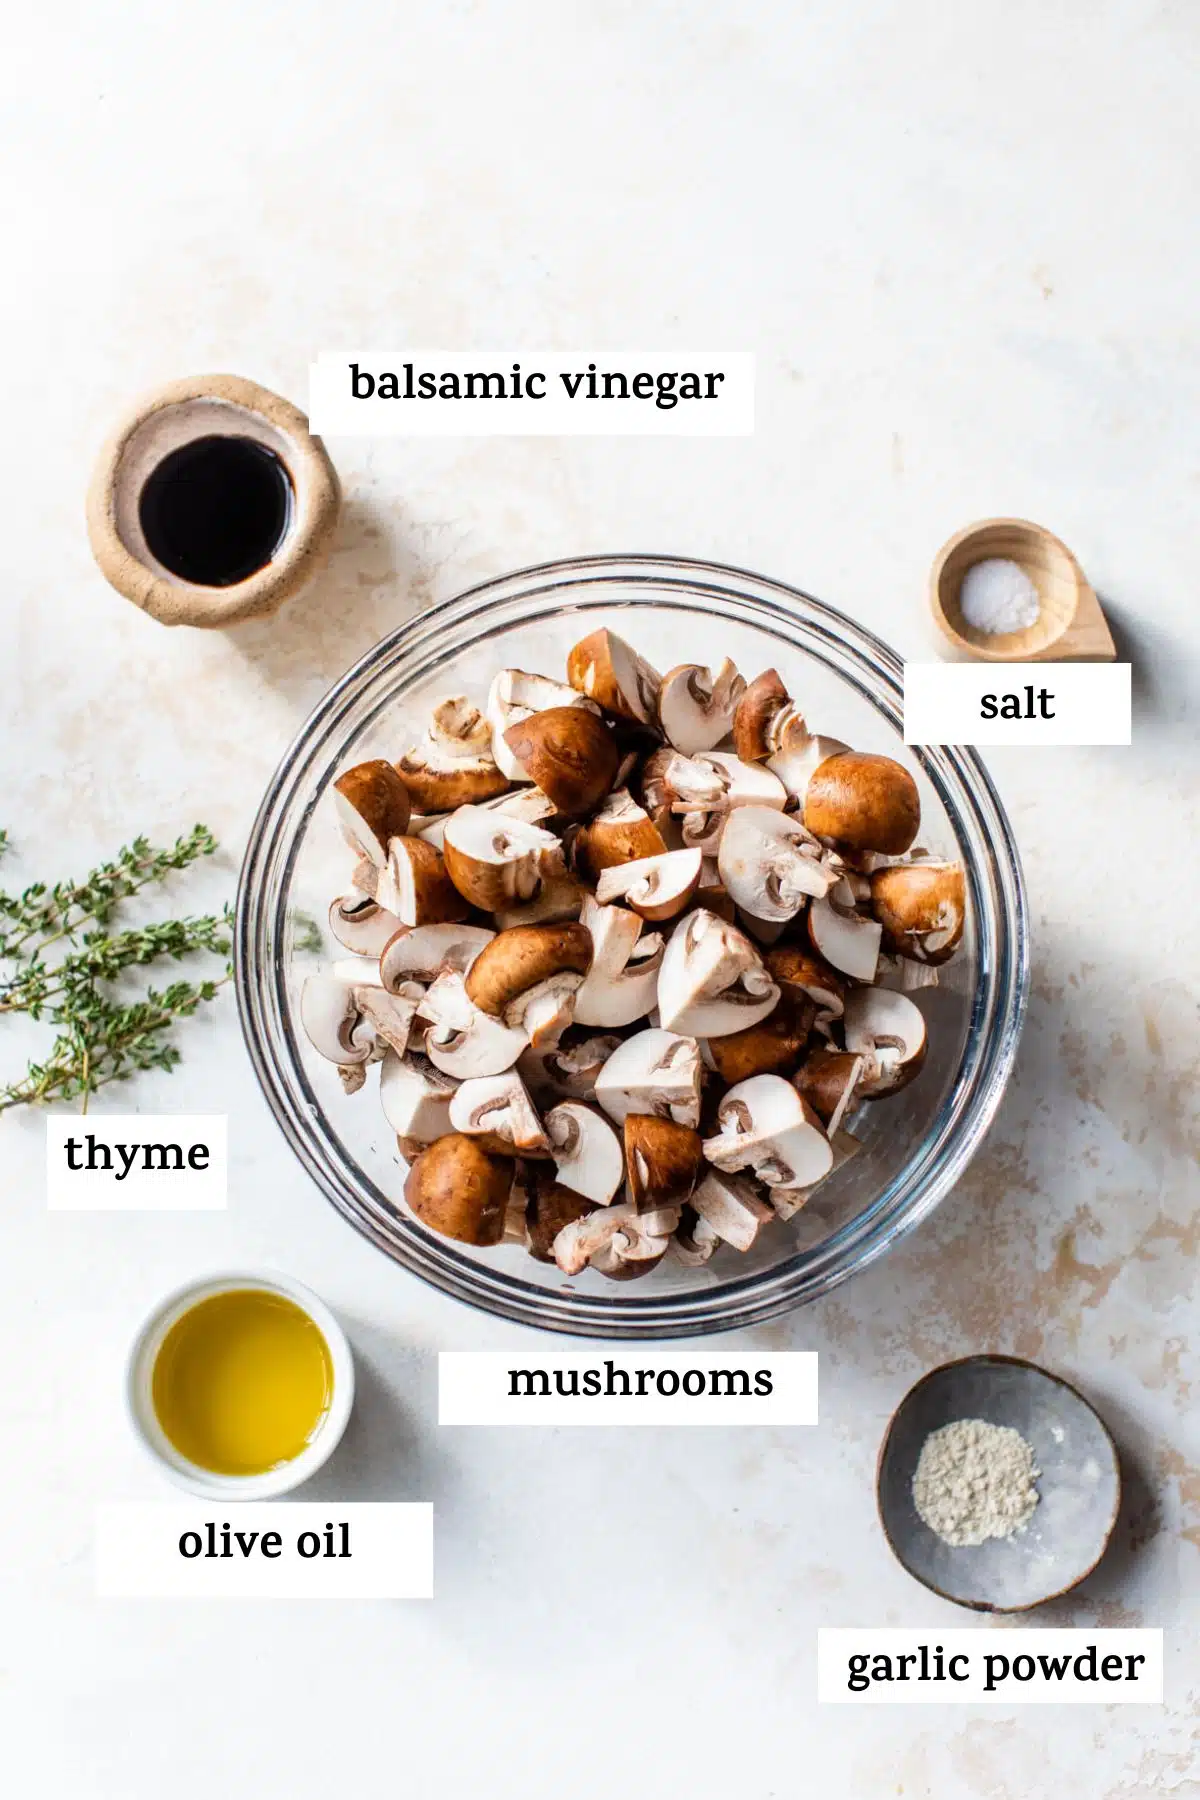 all ingredients listed: thyme, olive oil, mushrooms, balsamic vinegar, salt, and garlic powder